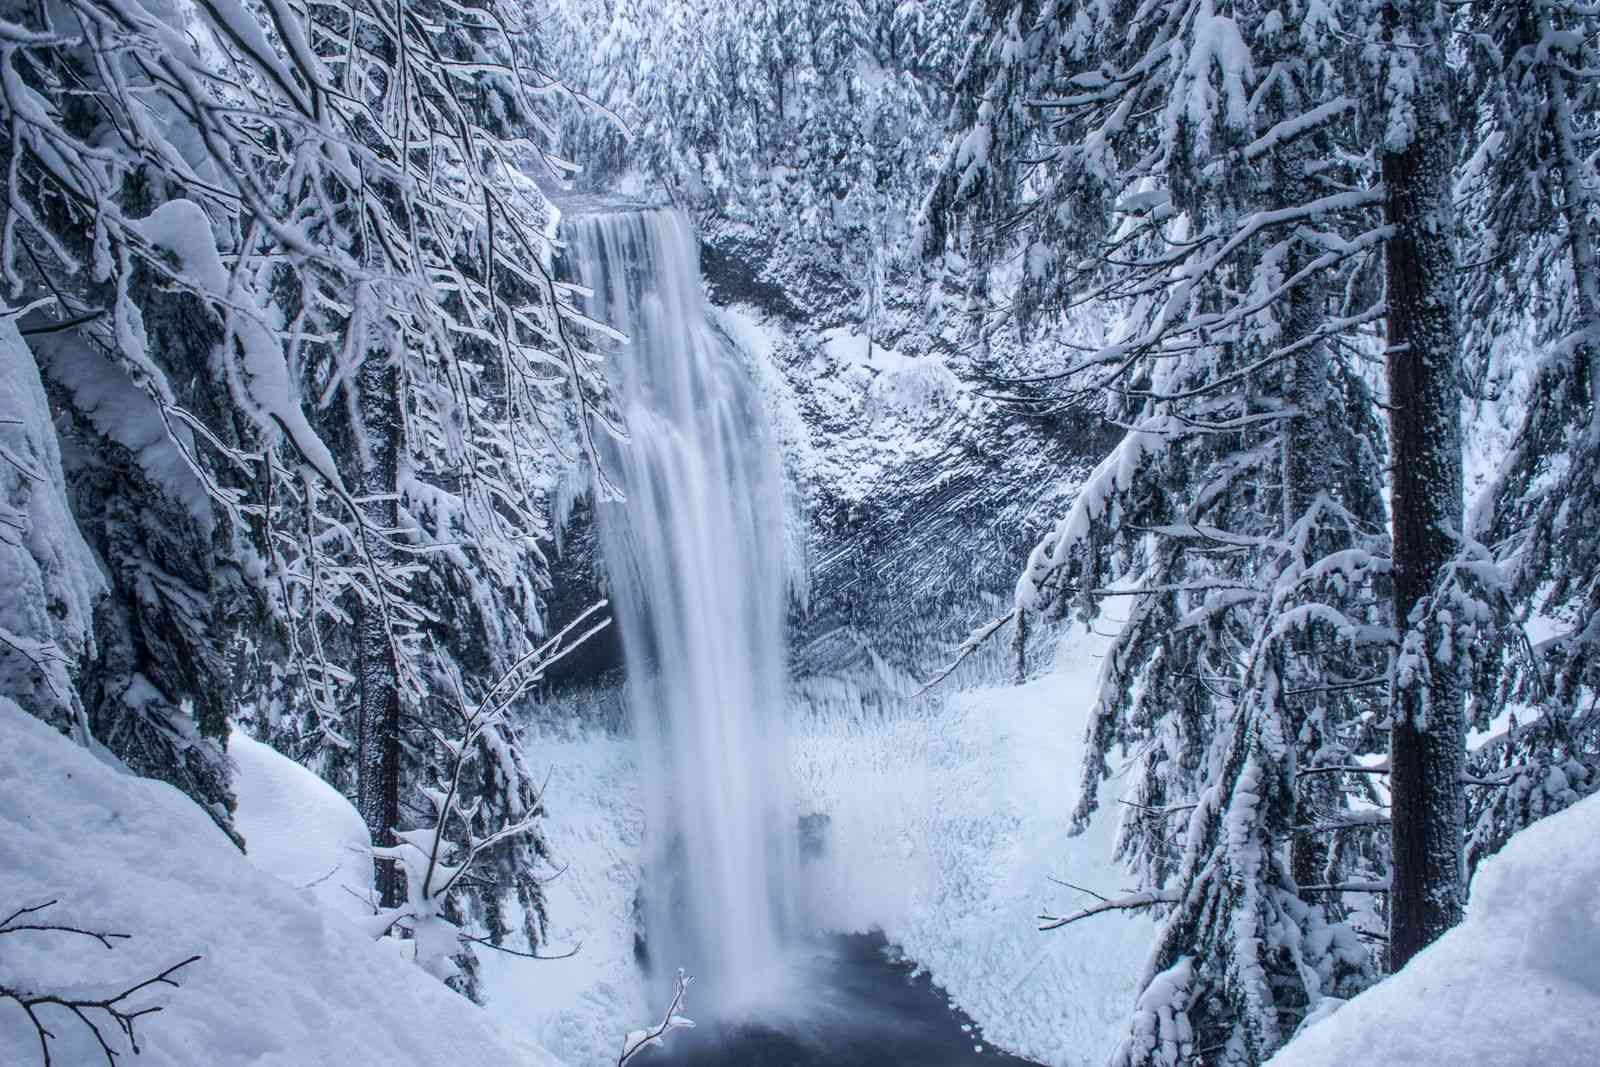 Salt Creek Falls is a stunning waterfall near Bend, Oregon especially in the winter.